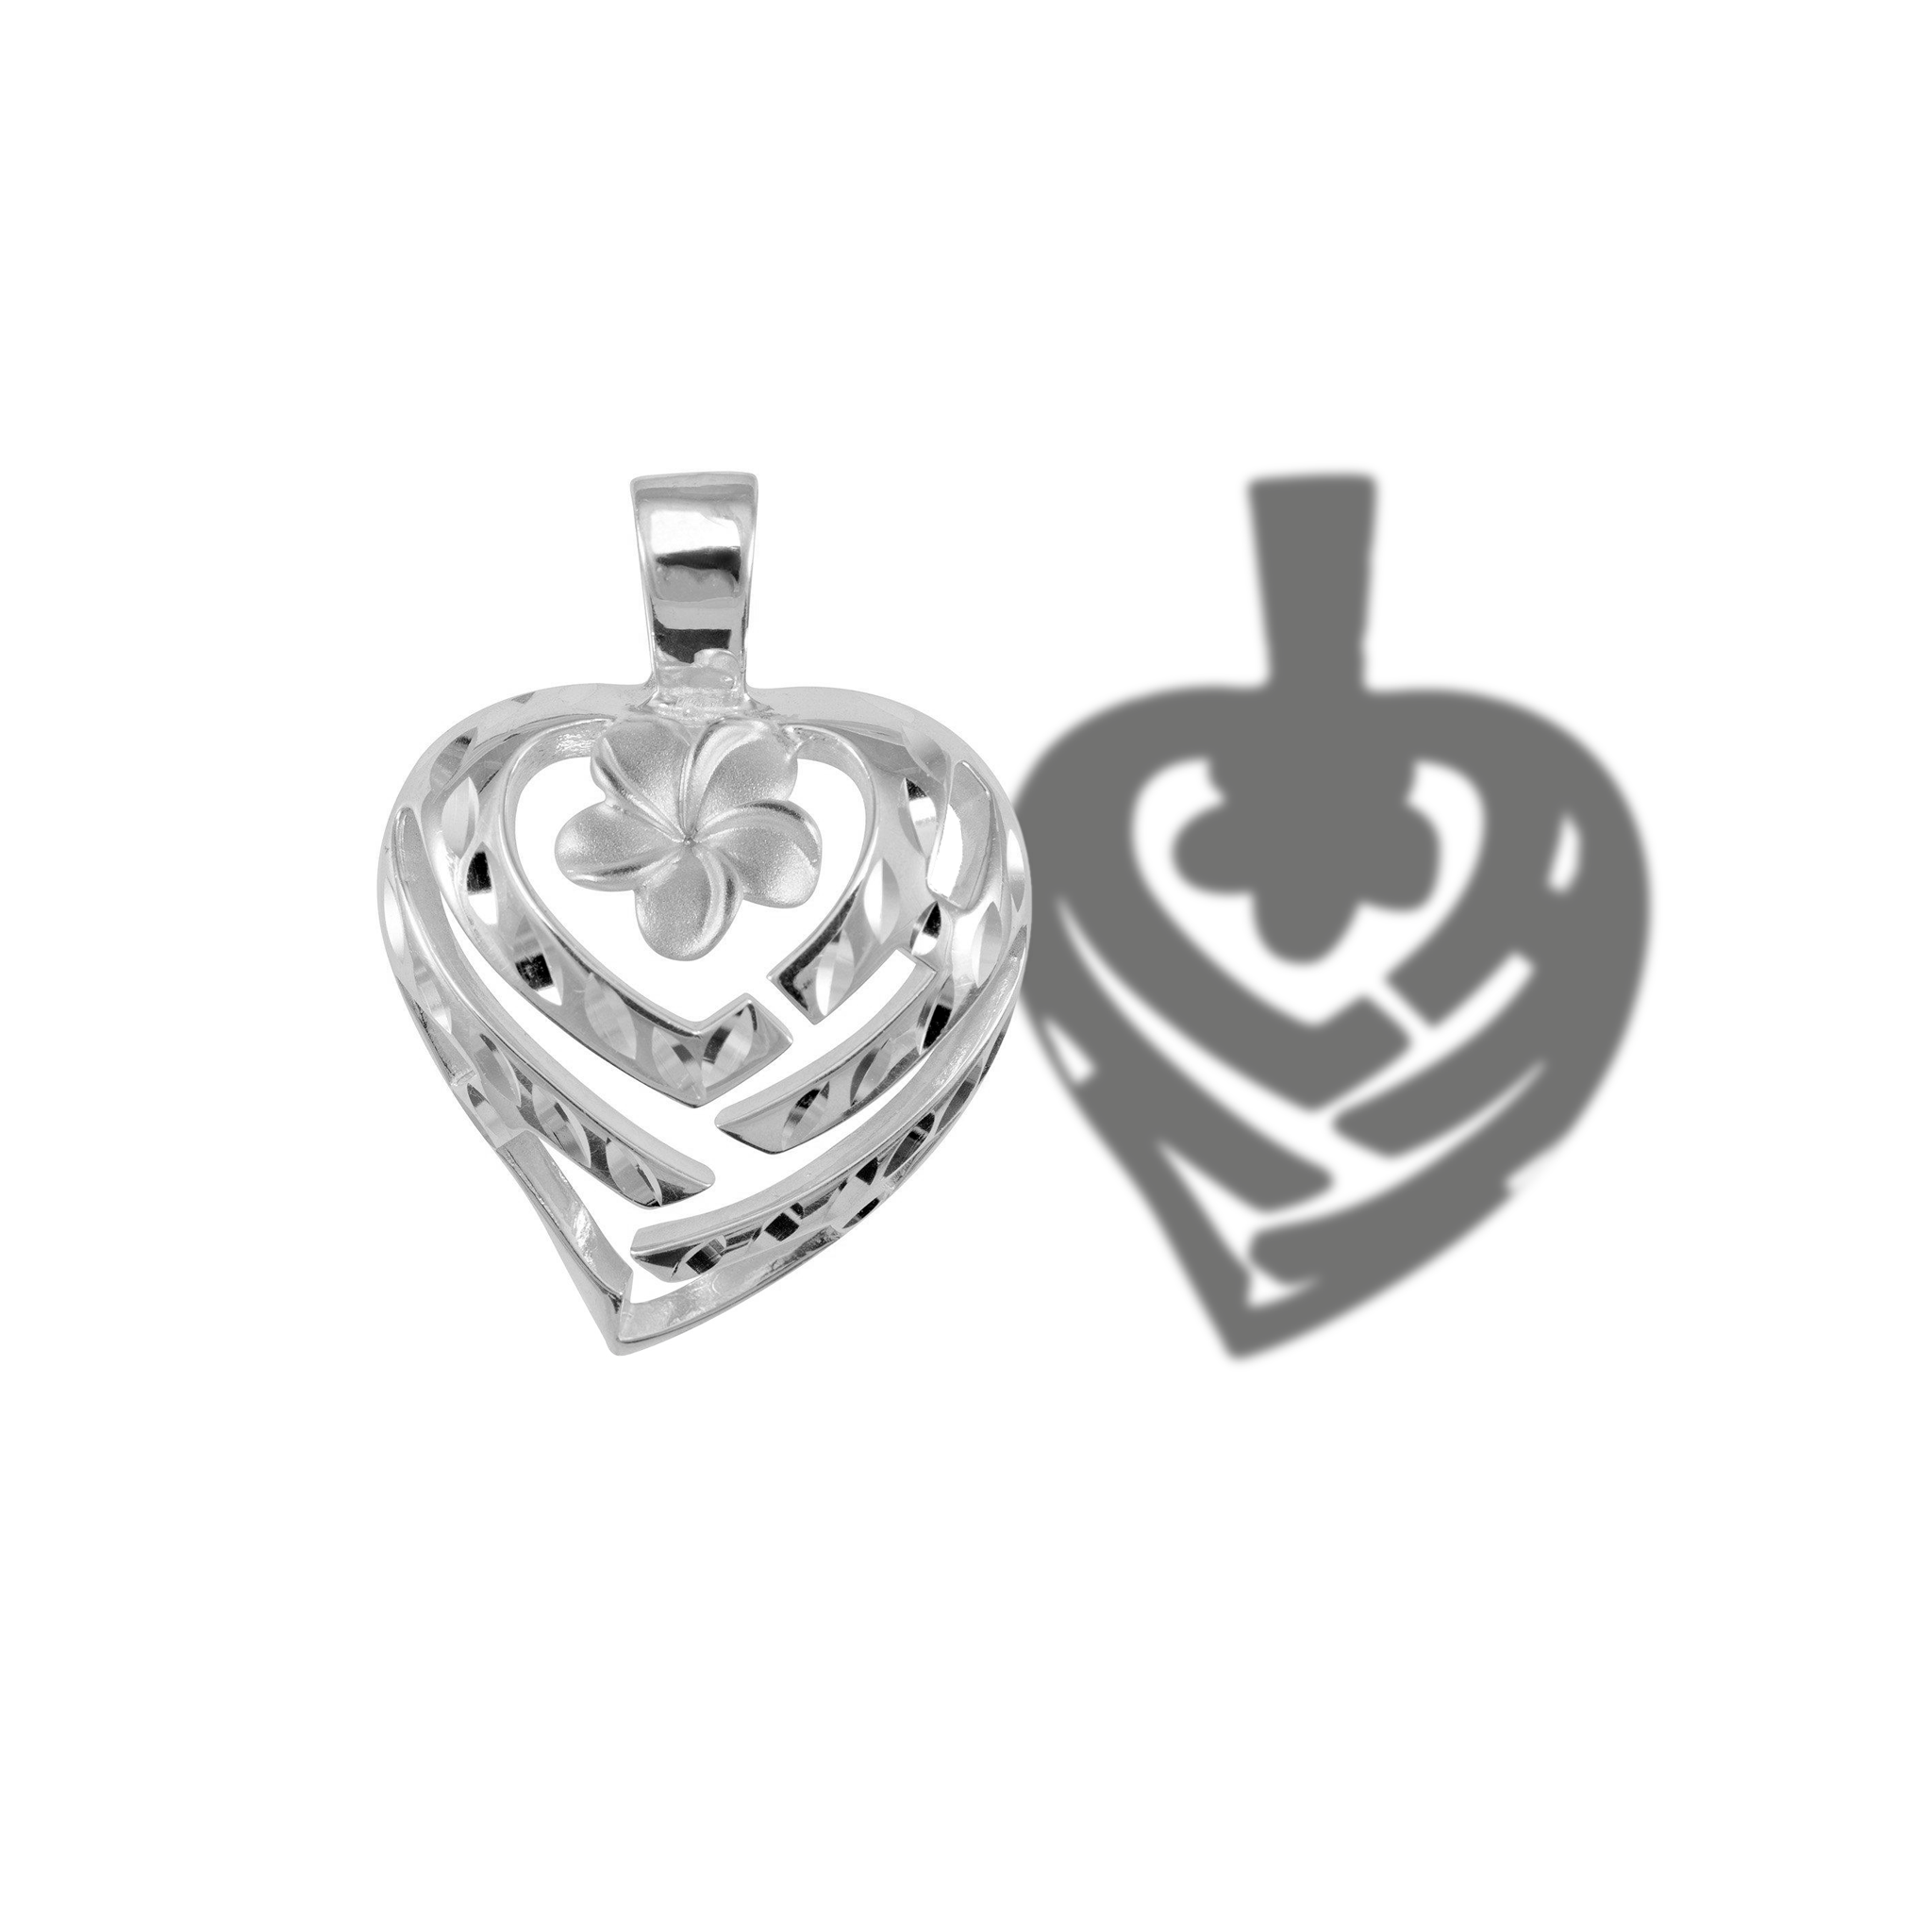 Aloha Heart Plumeria Pendant in Sterling Silver - 21mm